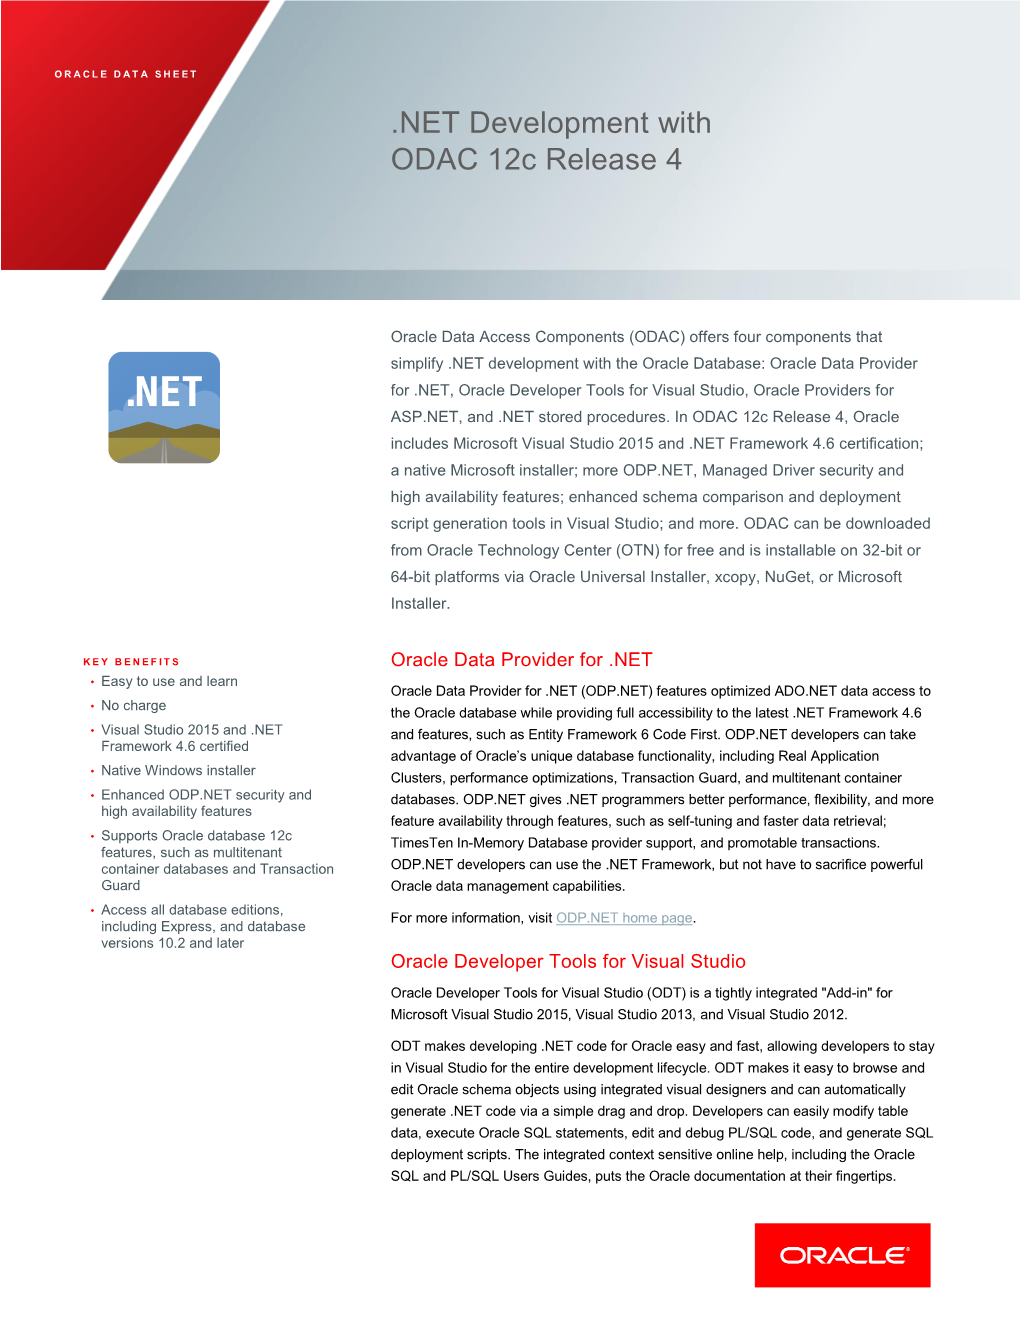 NET Development with ODAC 12C Release 4